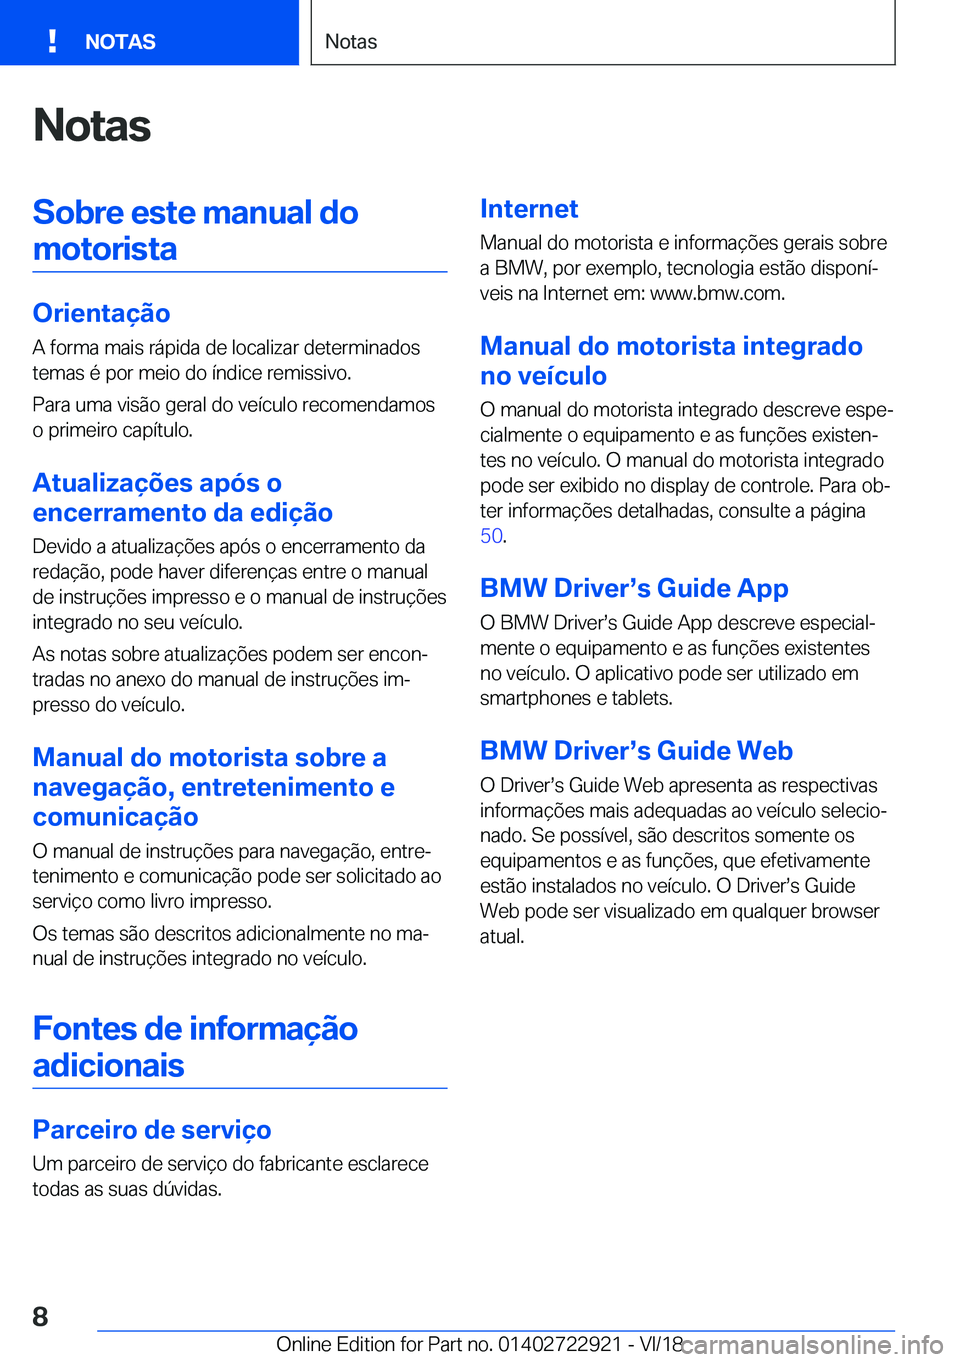 BMW X6 M 2019  Manual do condutor (in Portuguese) �N�o�t�a�s�S�o�b�r�e��e�s�t�e��m�a�n�u�a�l��d�o�m�o�t�o�r�i�s�t�a
�O�r�i�e�n�t�a�